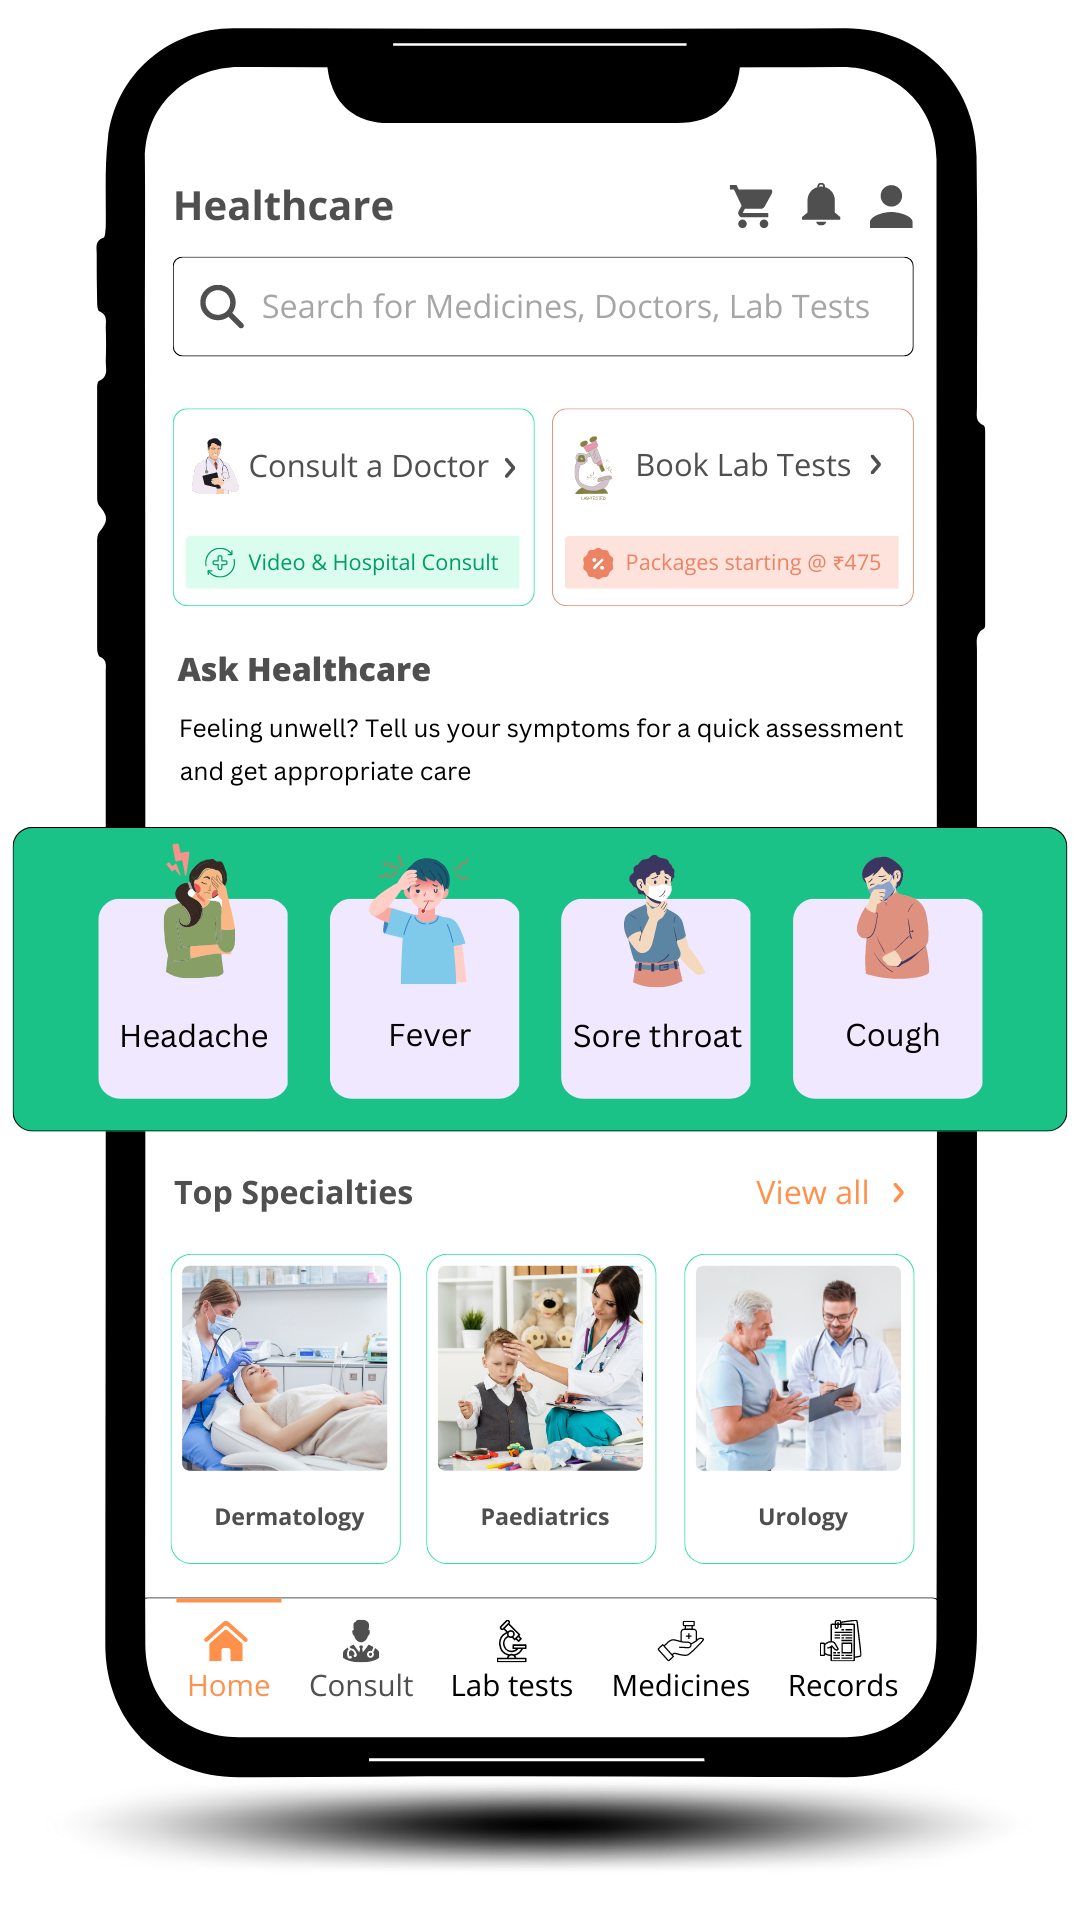 Healthcare Mobile App Development Company